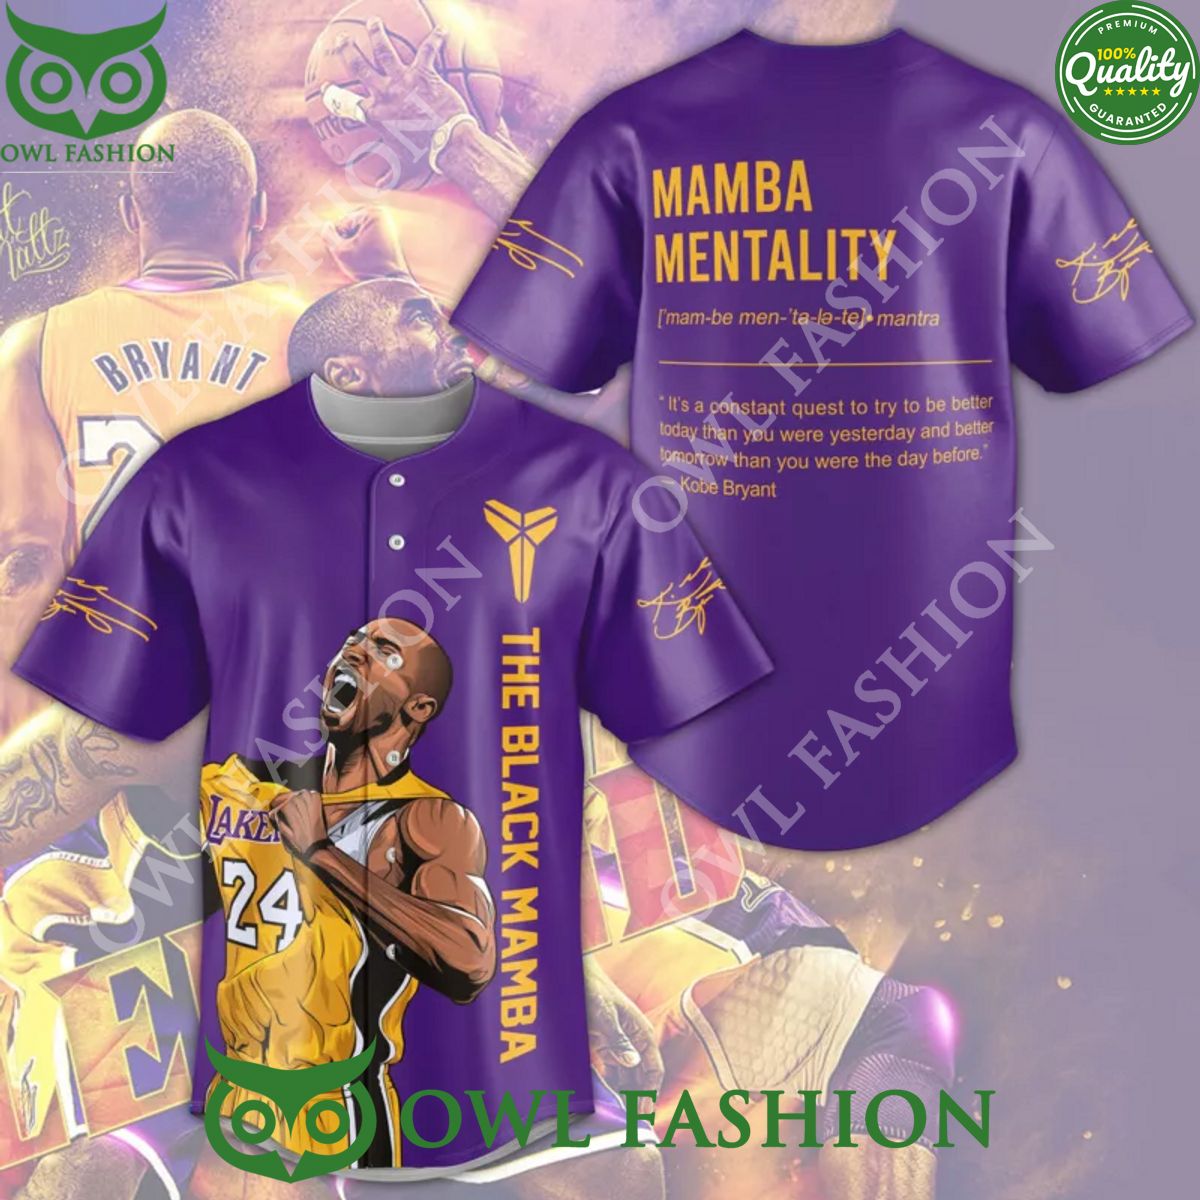 Legend Kobe Bryant The Black Mamba Mentalilty Printed Purple Baseball Jersey